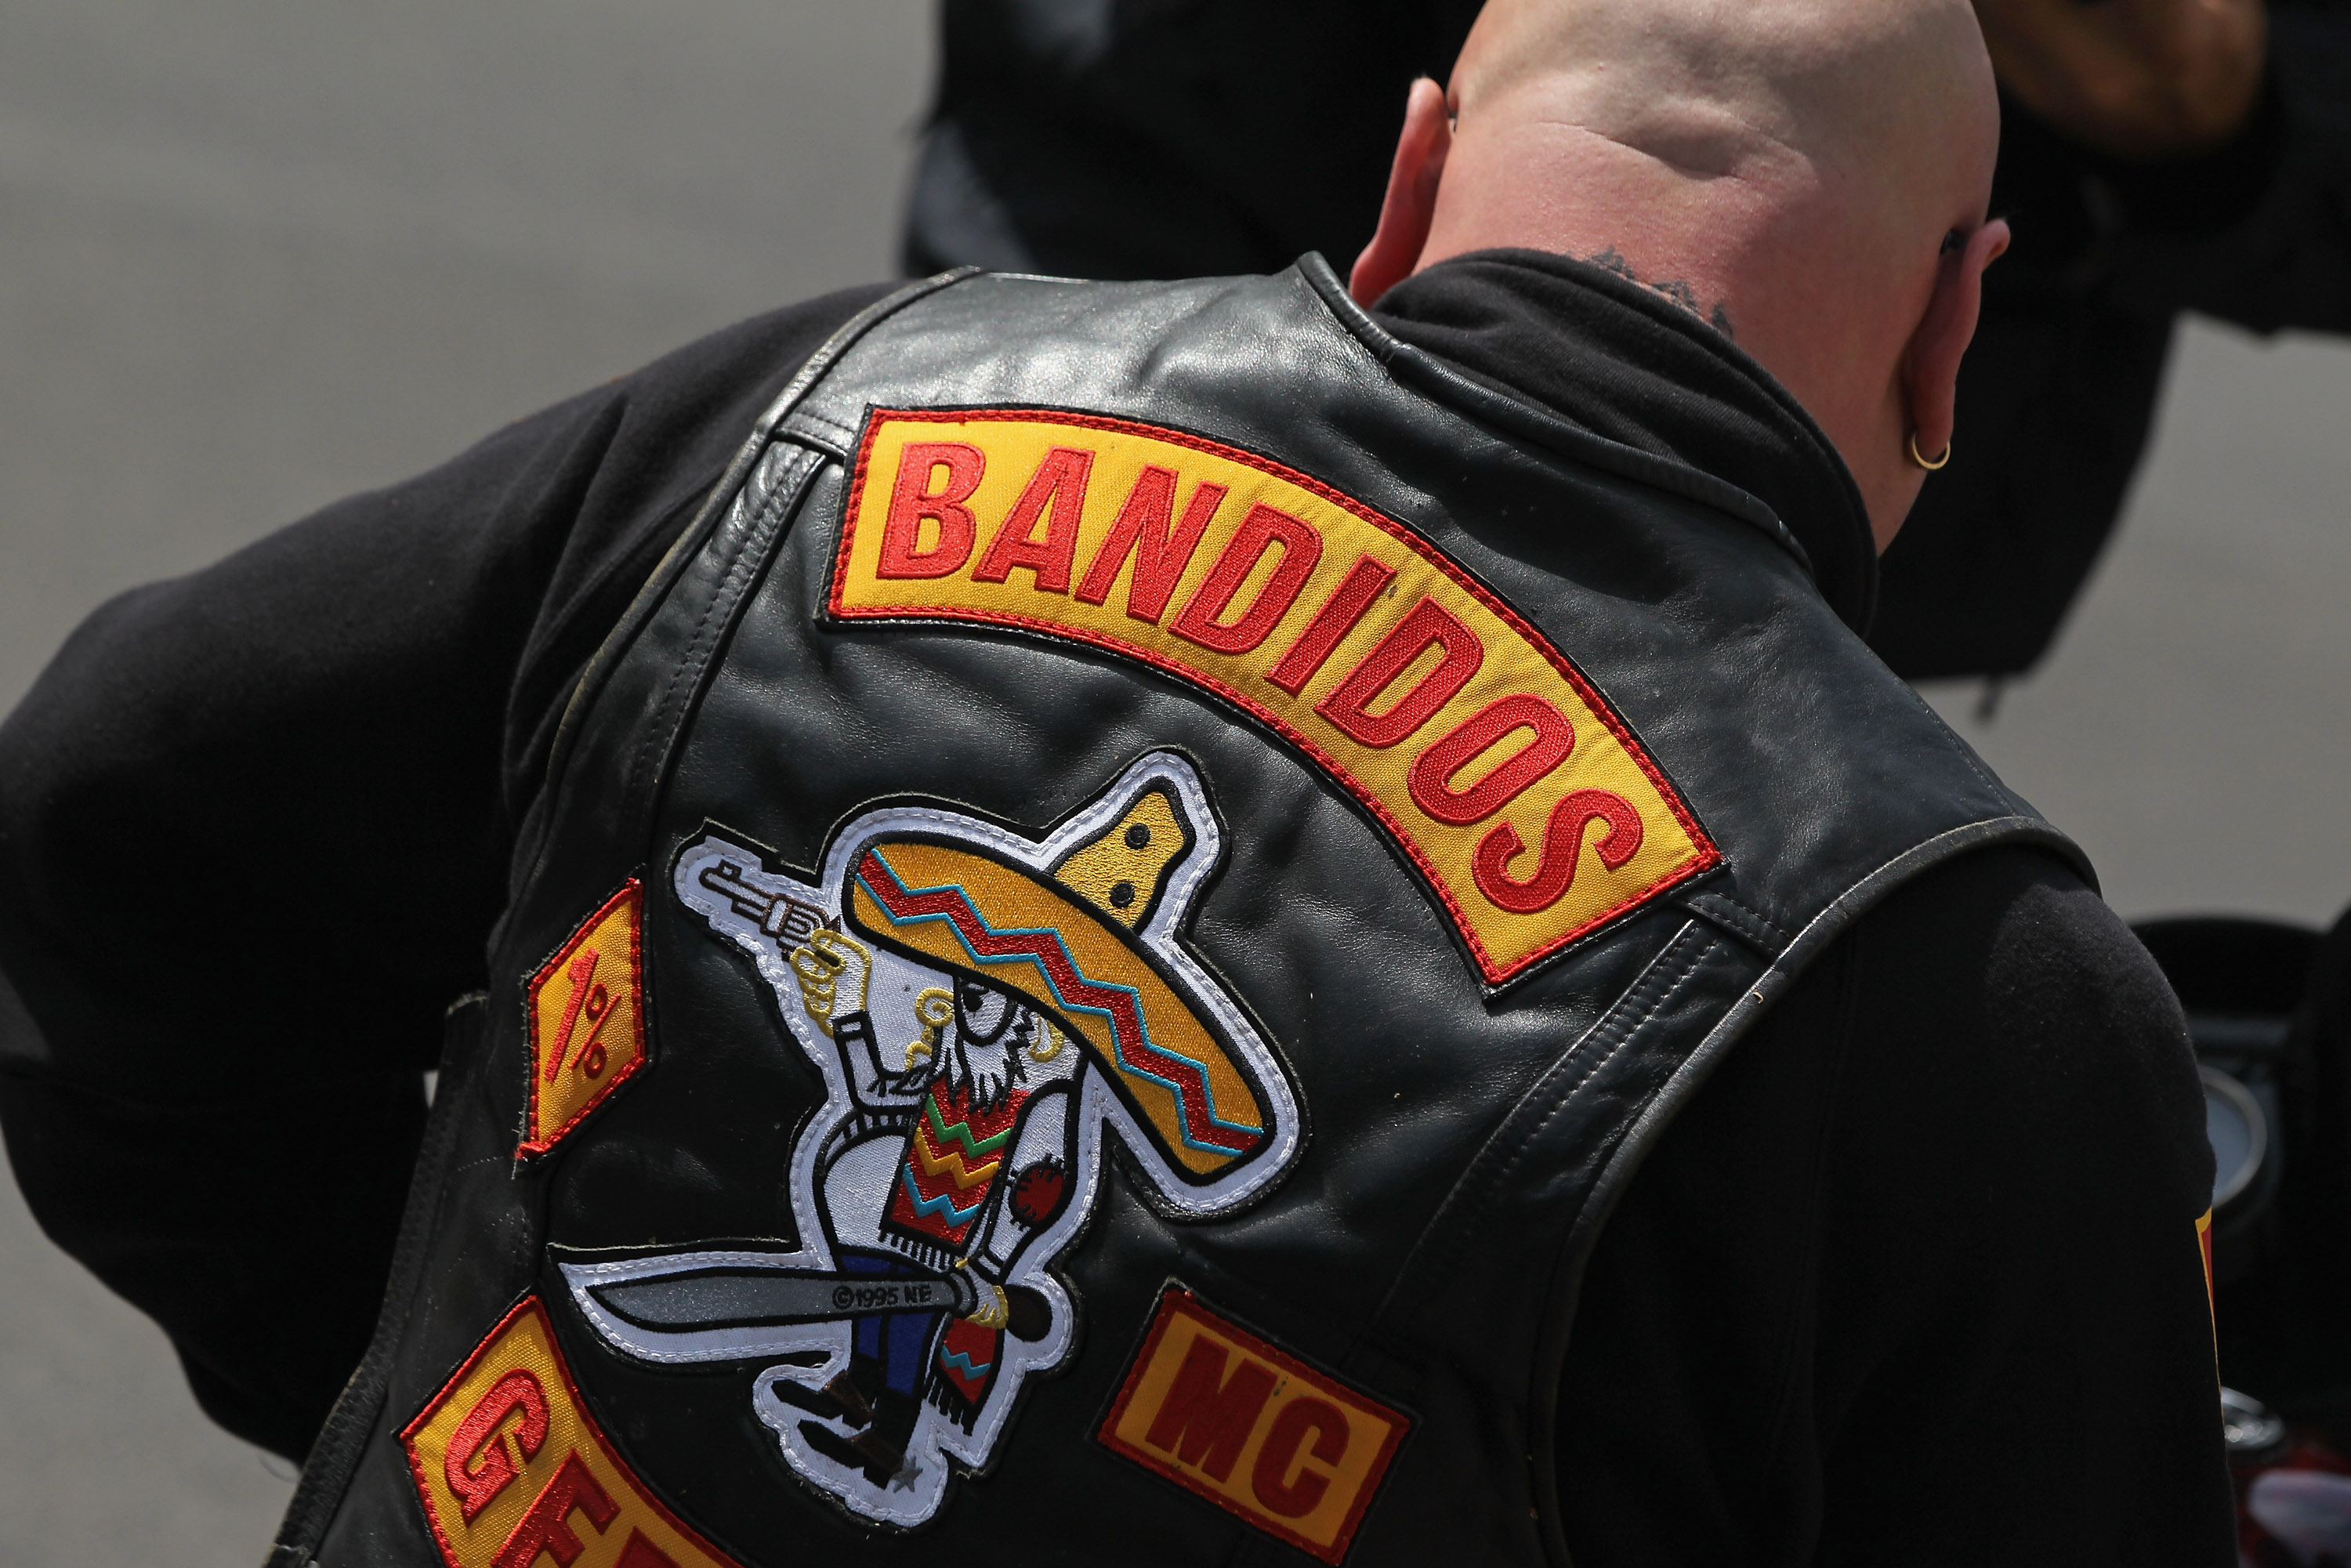 Bandidos Motorcycle Club, Bandidos biker gang, bandidos waco texas shooting shootout